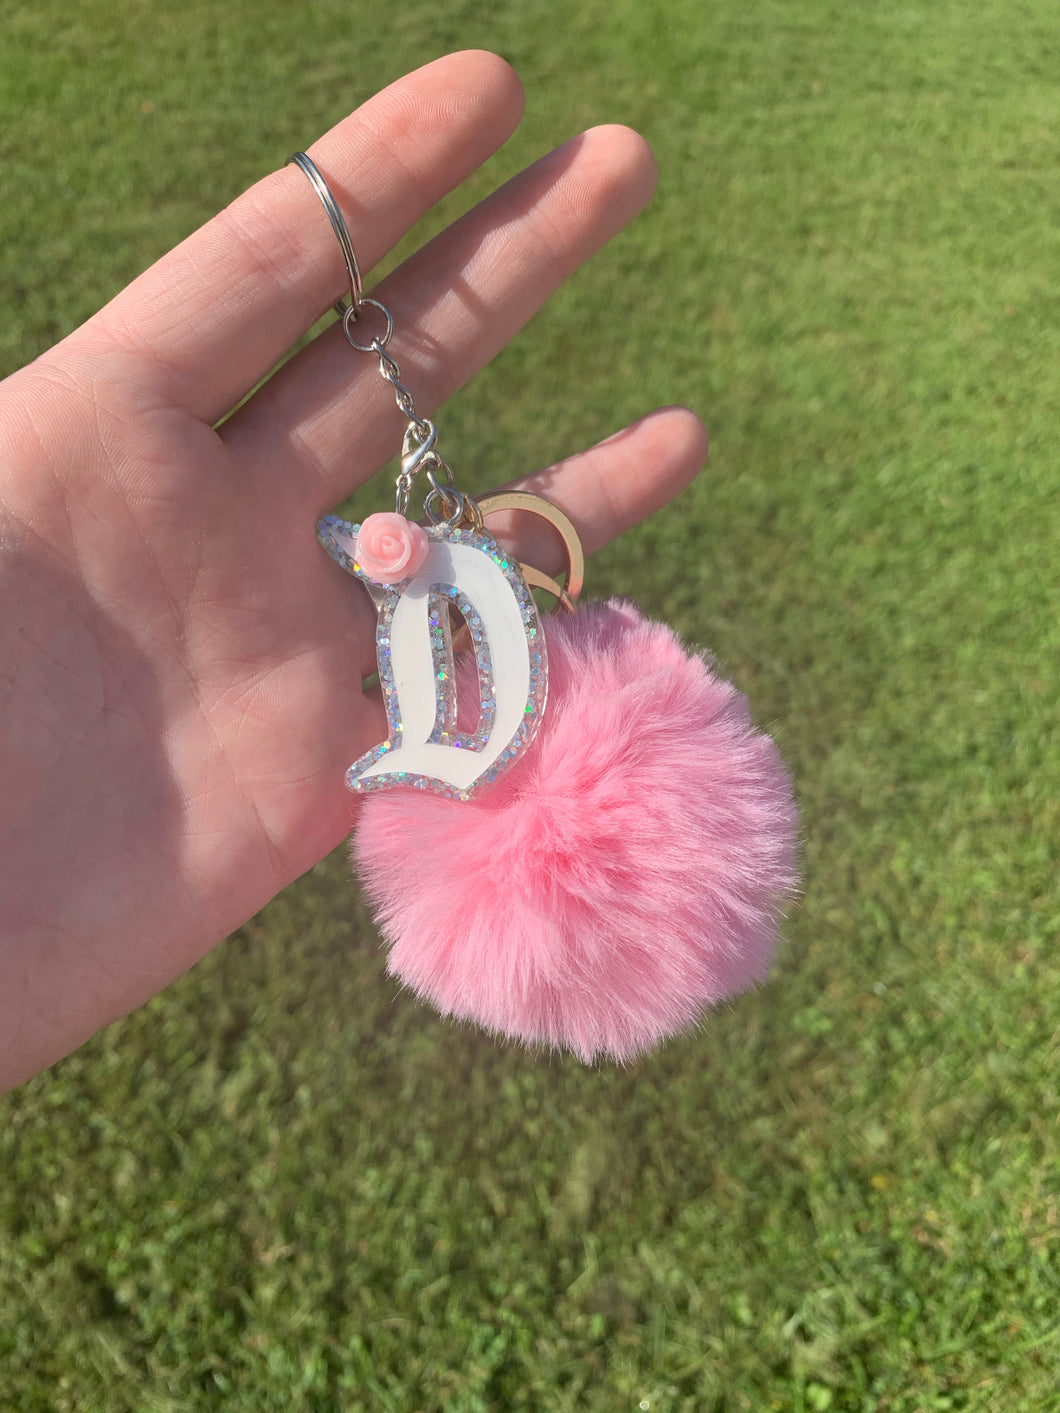 Holographic Glitter “D” Pastel Pink Pom-Pom Keychain - Light Pink Rose Dangle